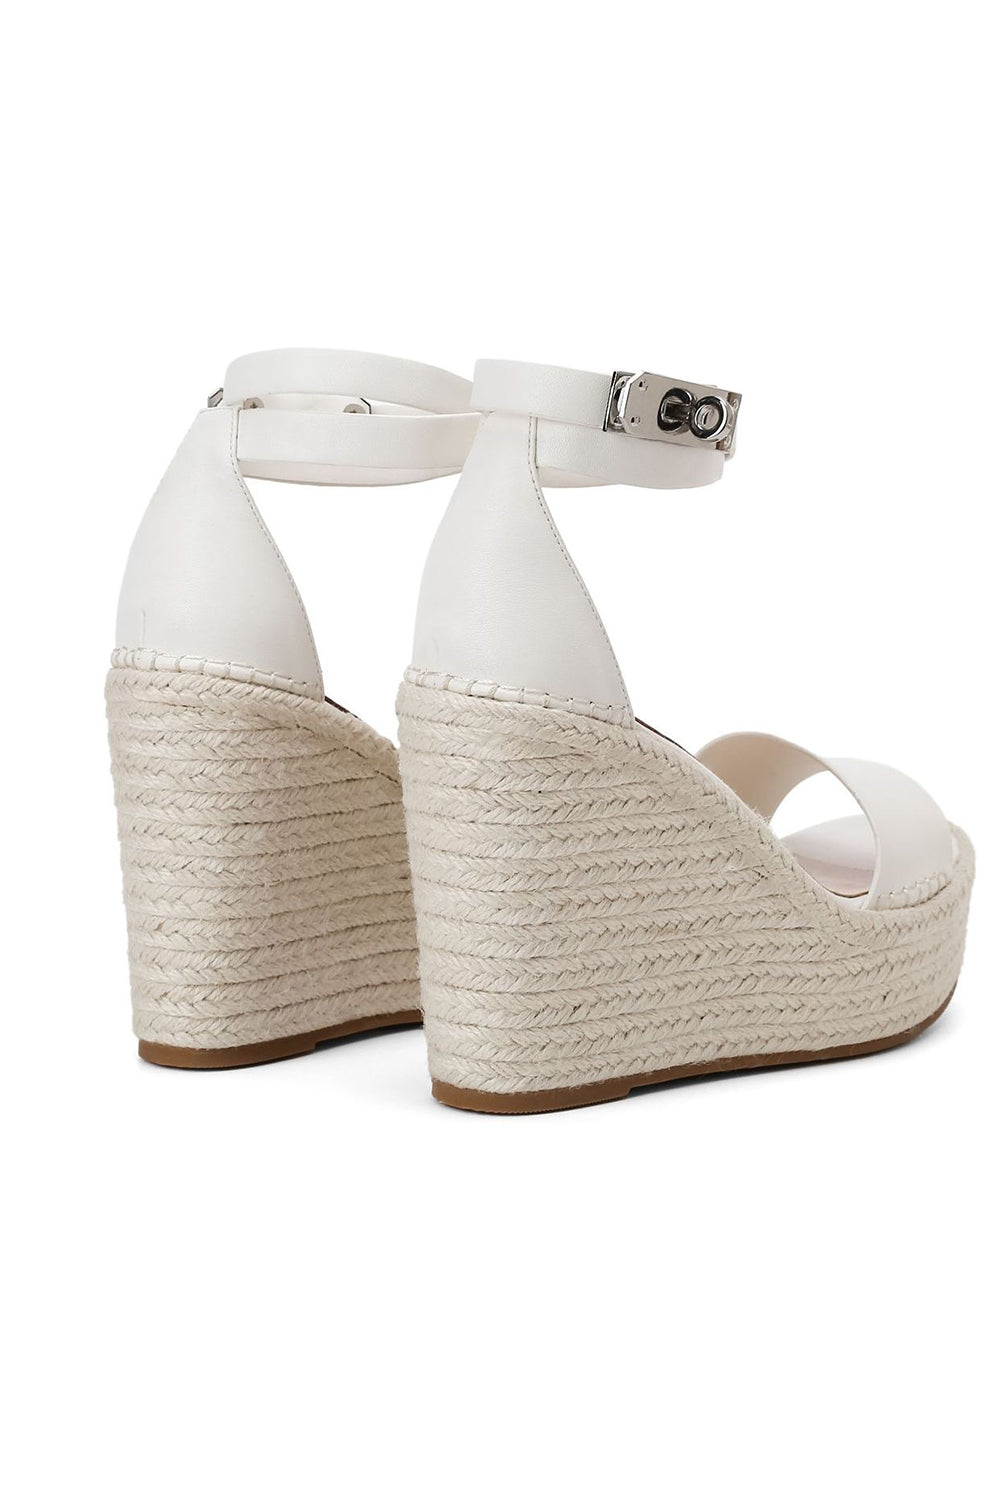 Espadrille Wide Fit Open Toe Platform Wedge Sandals - White